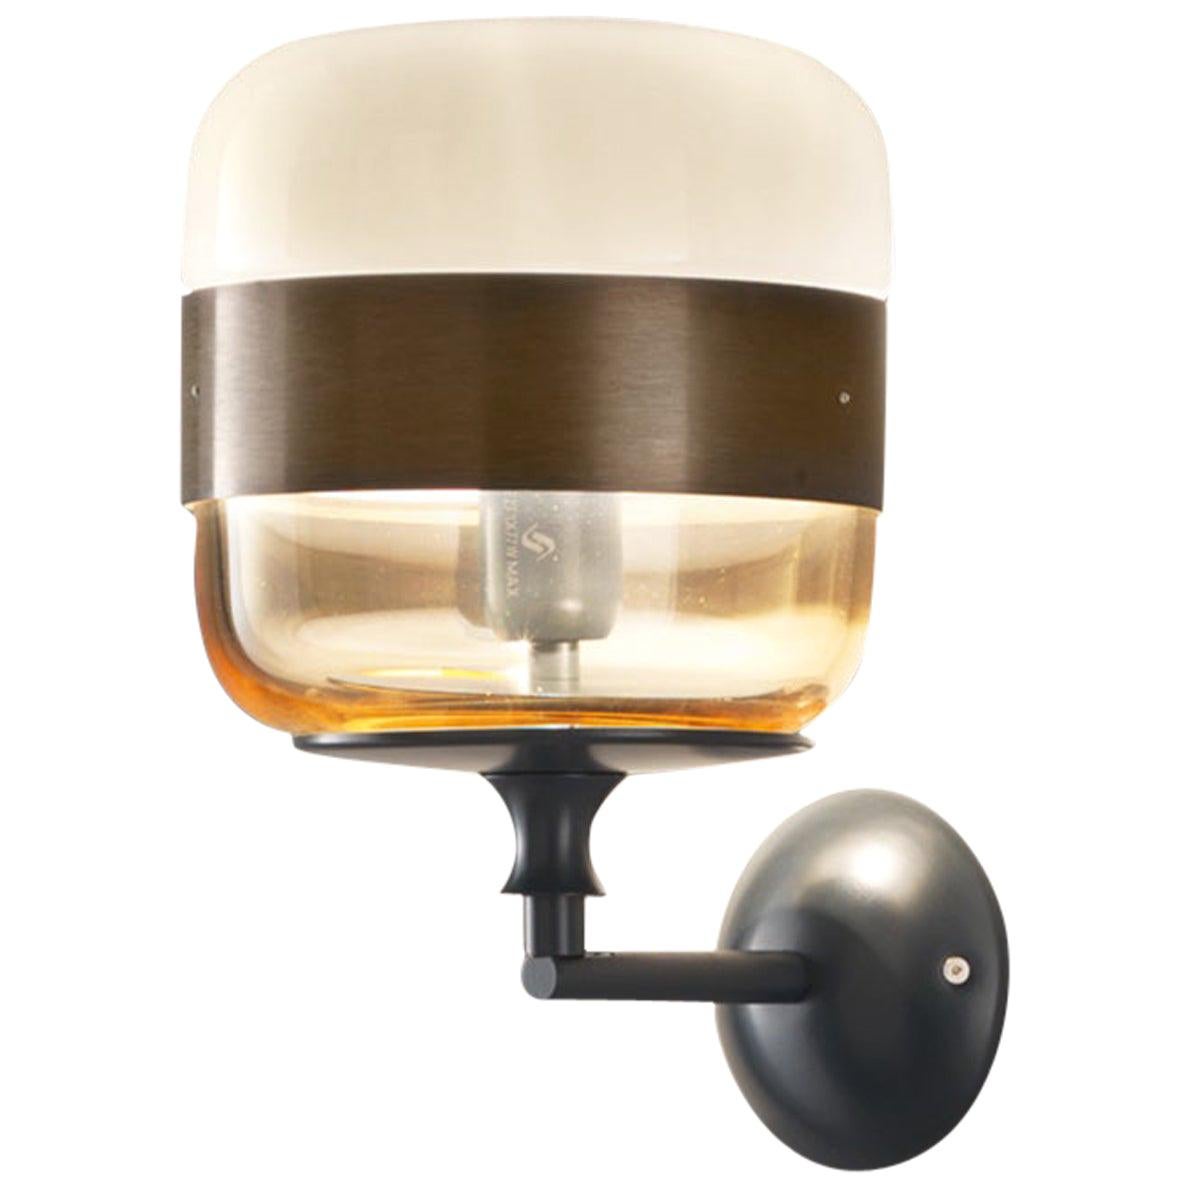 Vistosi Futura APP Wall Lamp in Amber by Hangar Design Group